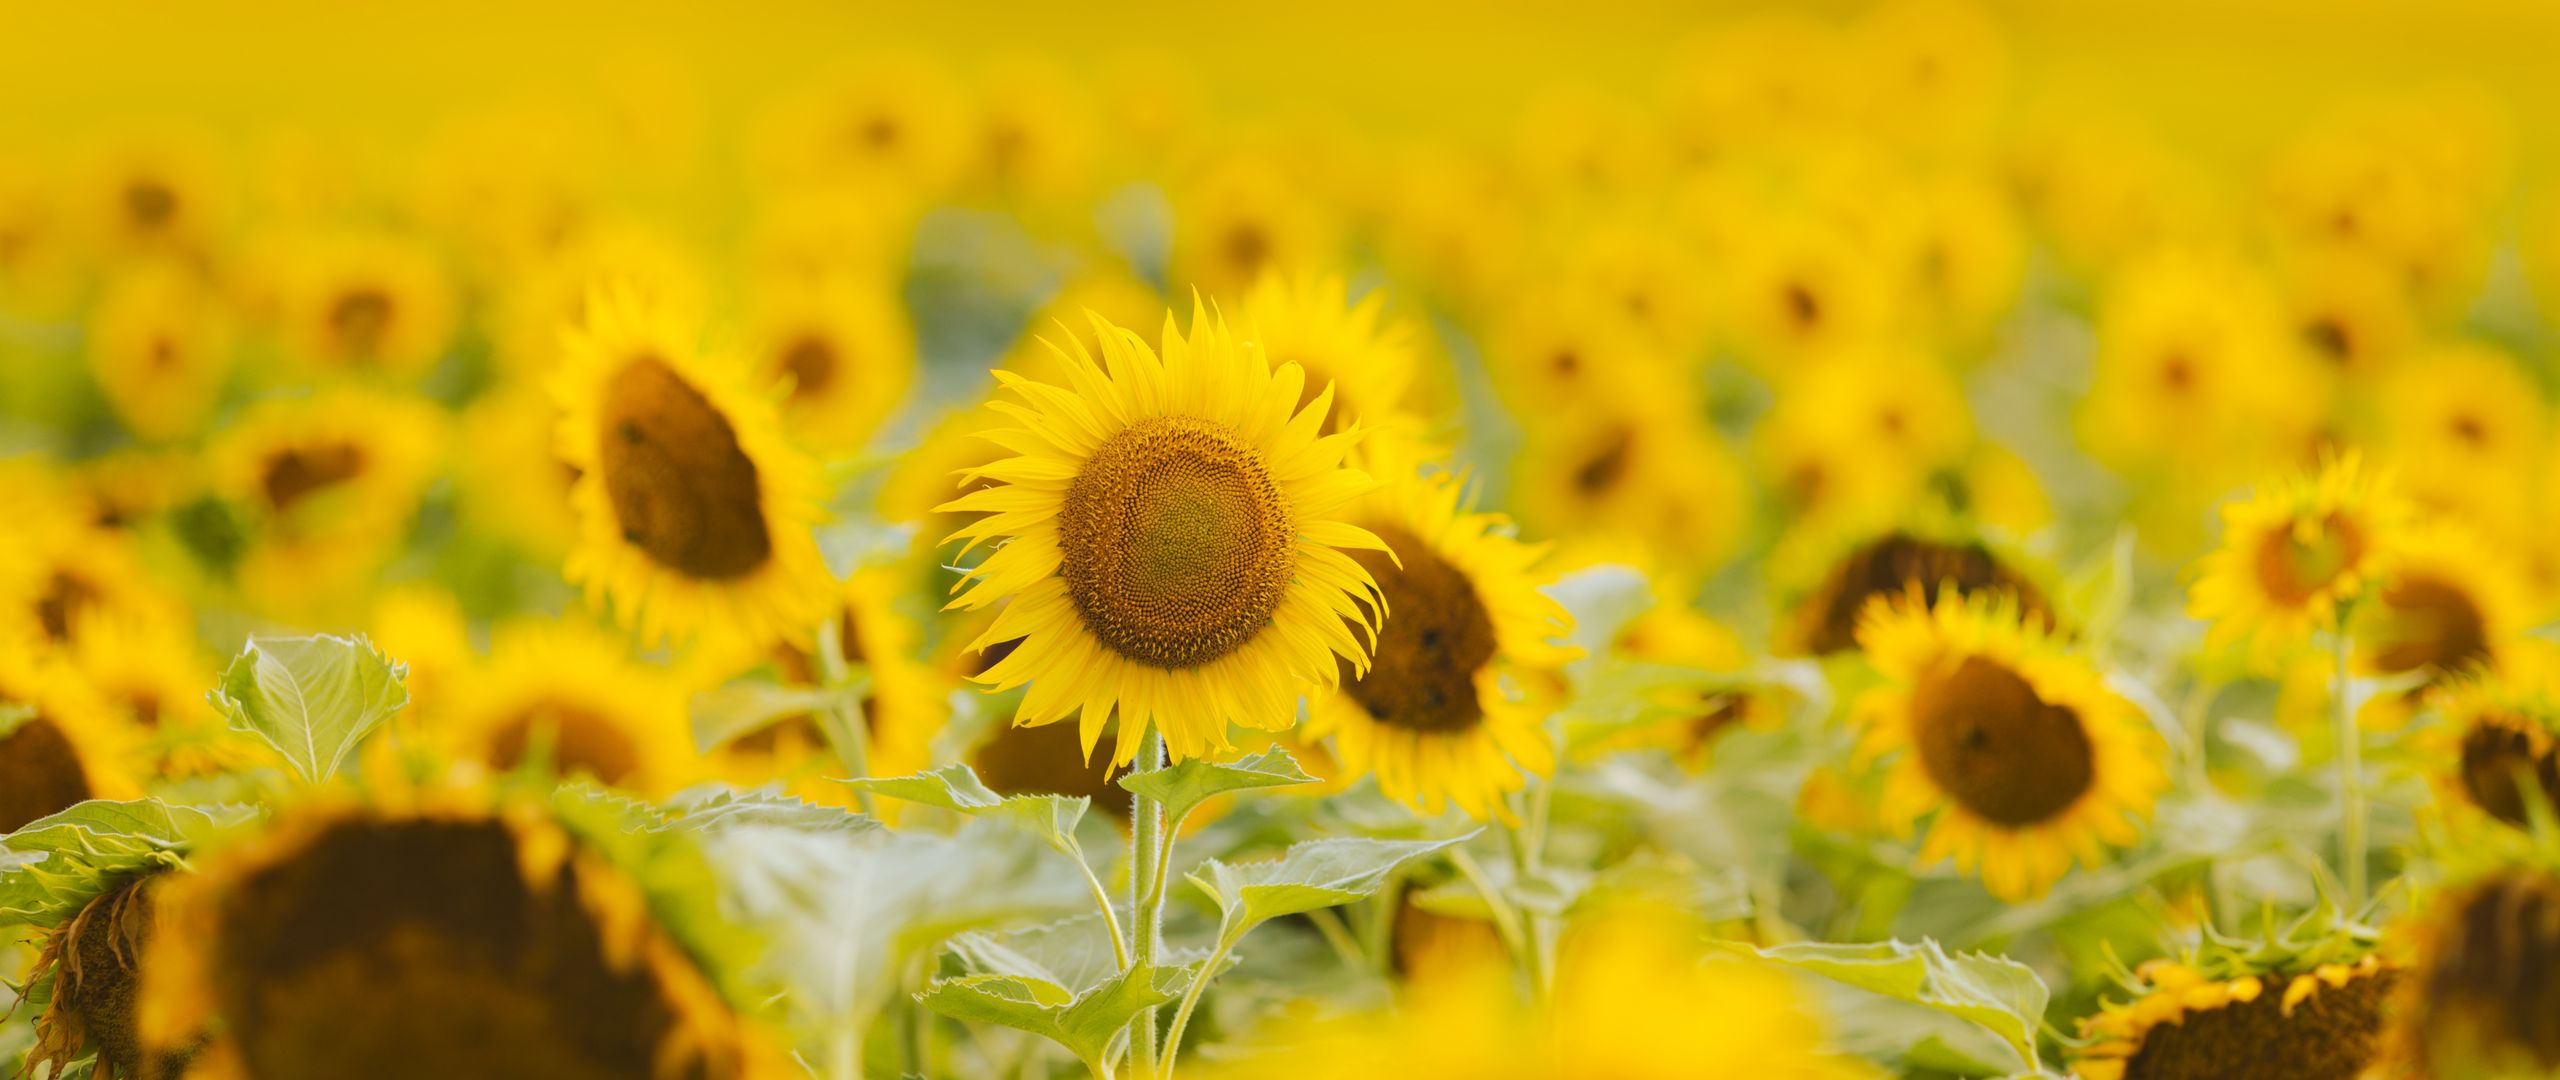 Download Wallpaper 2560x1080 Sunflowers Flowers Field Plant Yellow